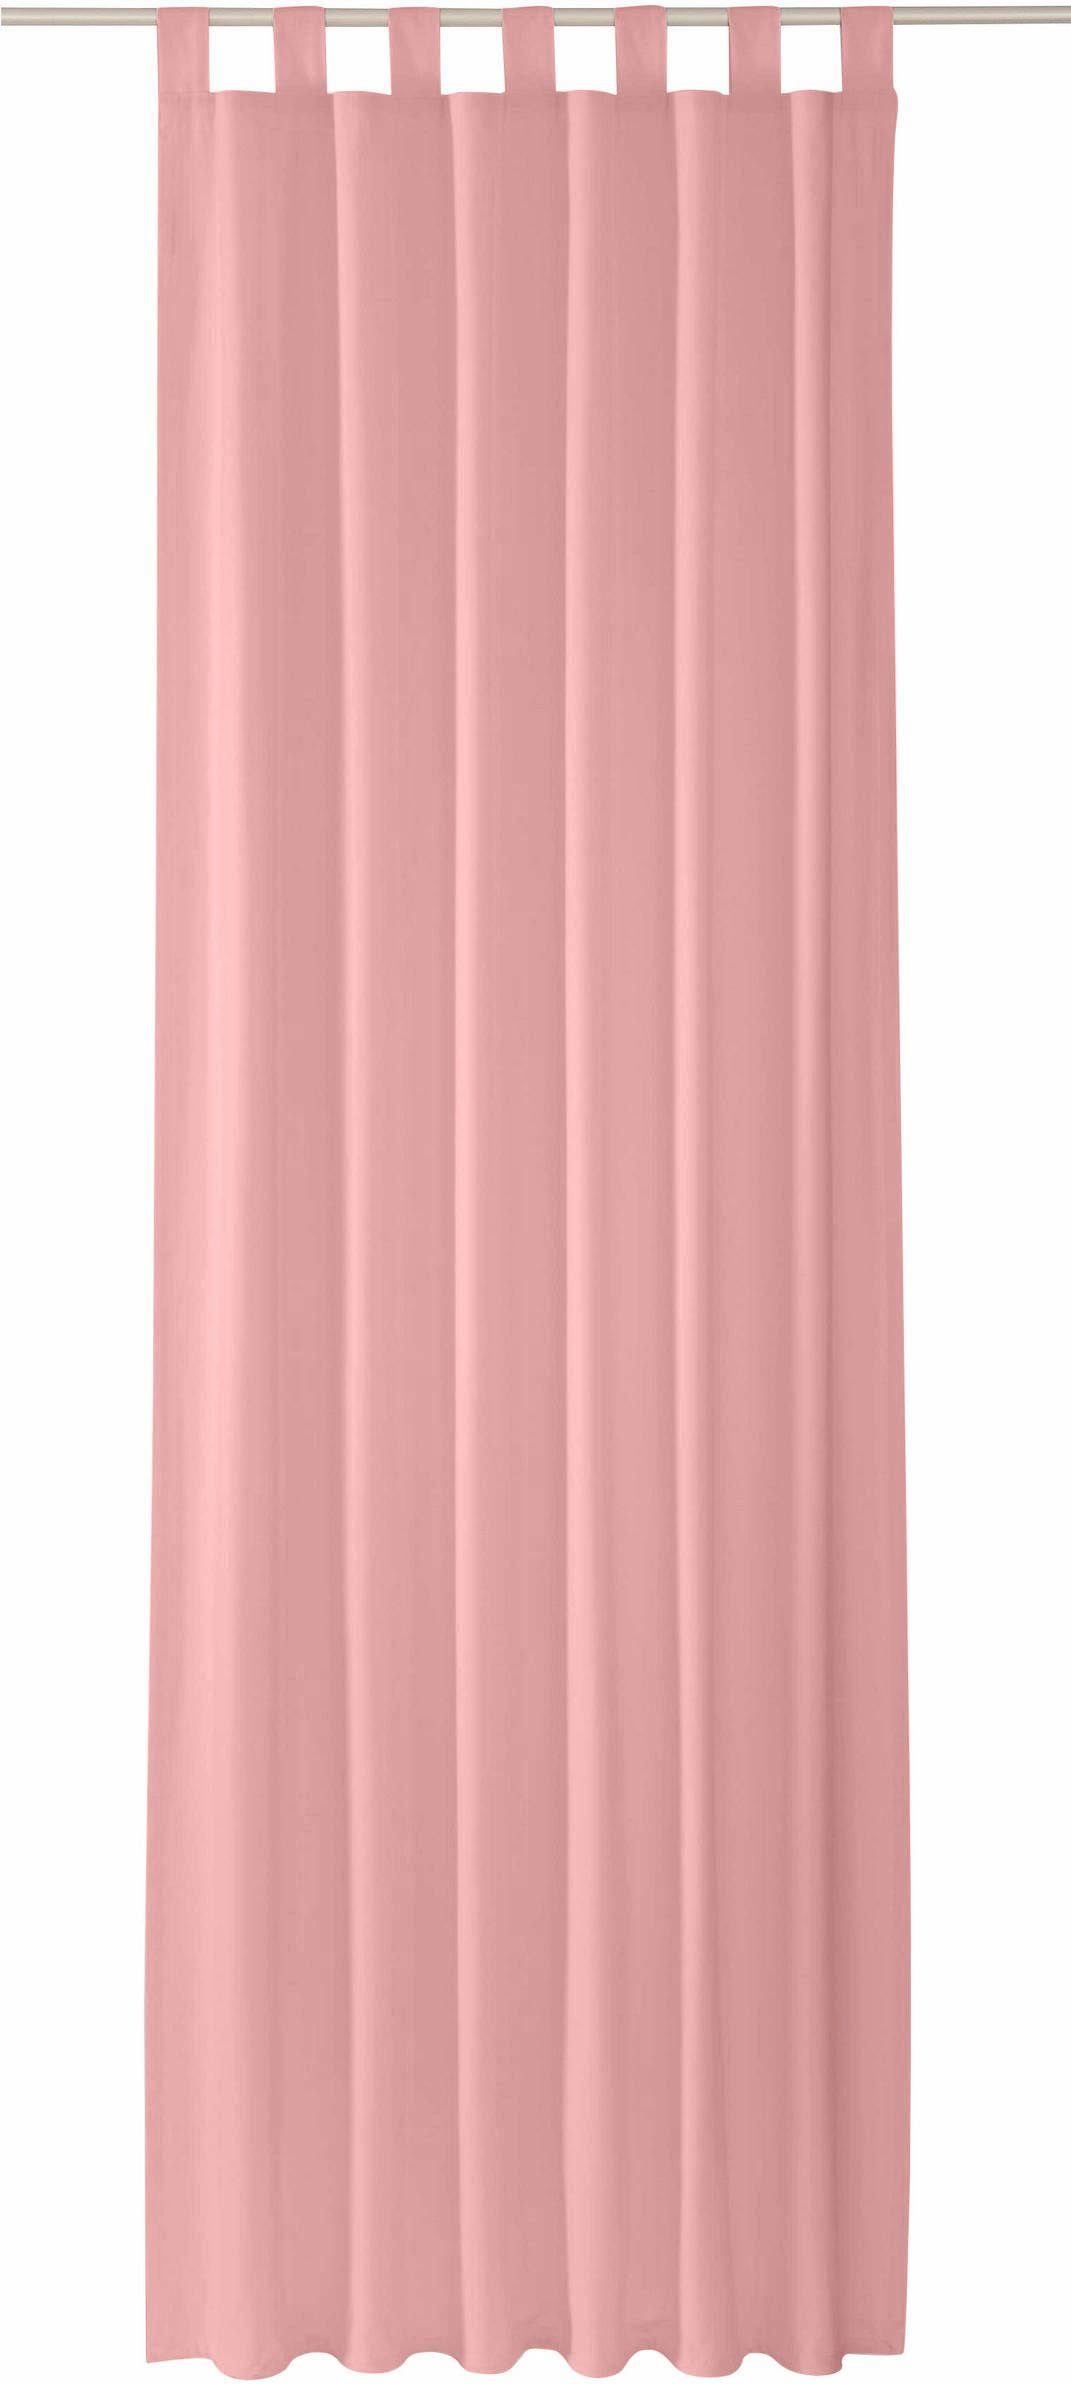 blickdicht rosé (1 TAILOR blickdicht, Schlaufen Dove, TOM HOME, St), Vorhang